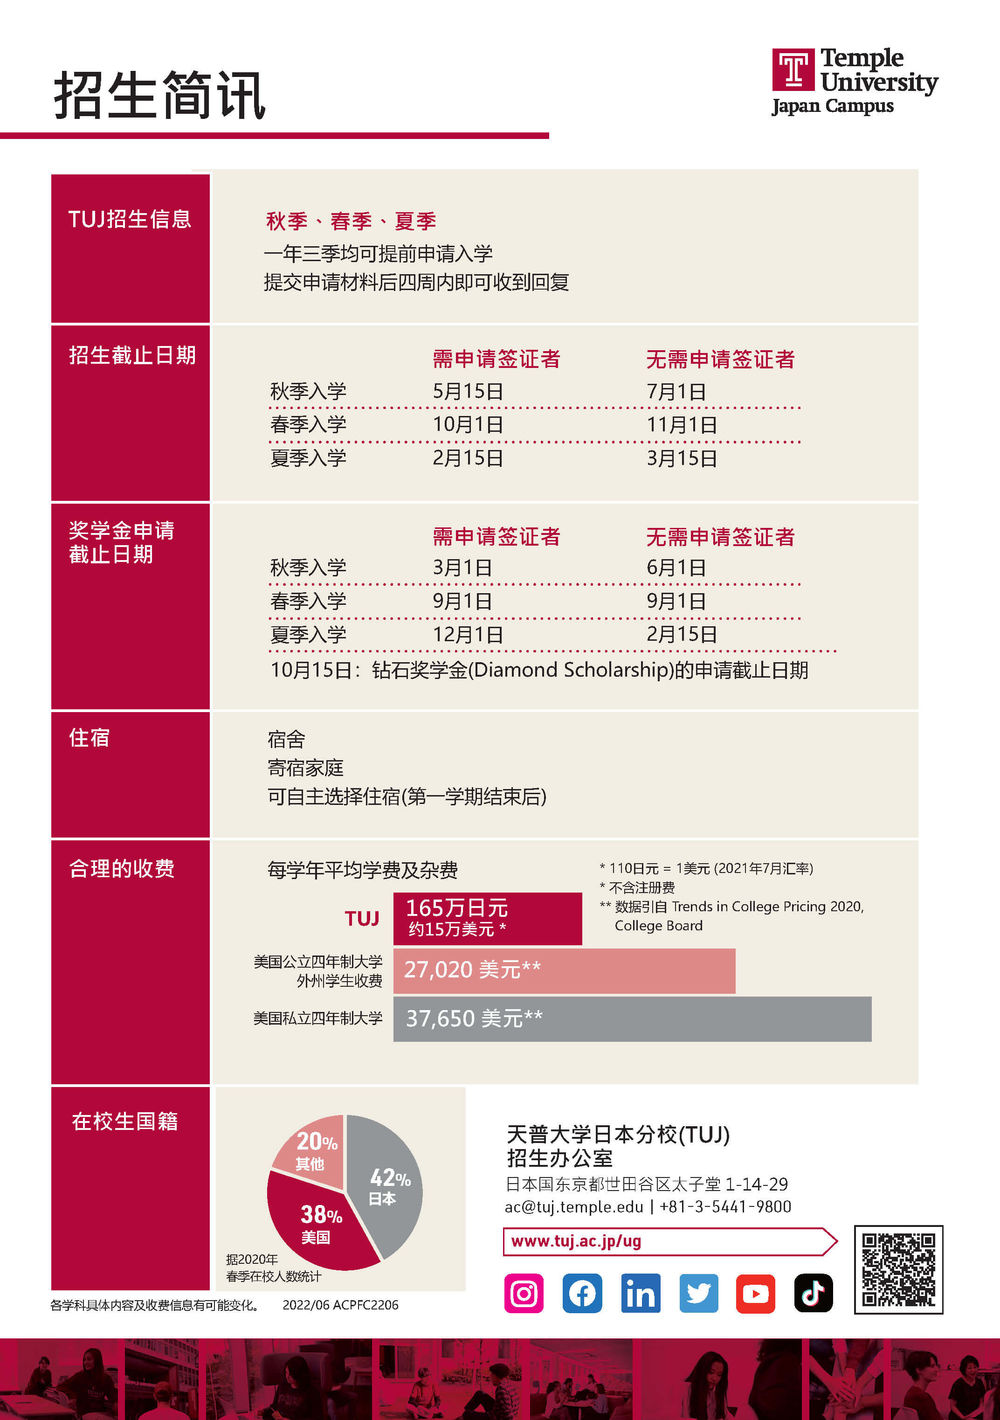 Undergraduate Program Overview 02 - Chinese